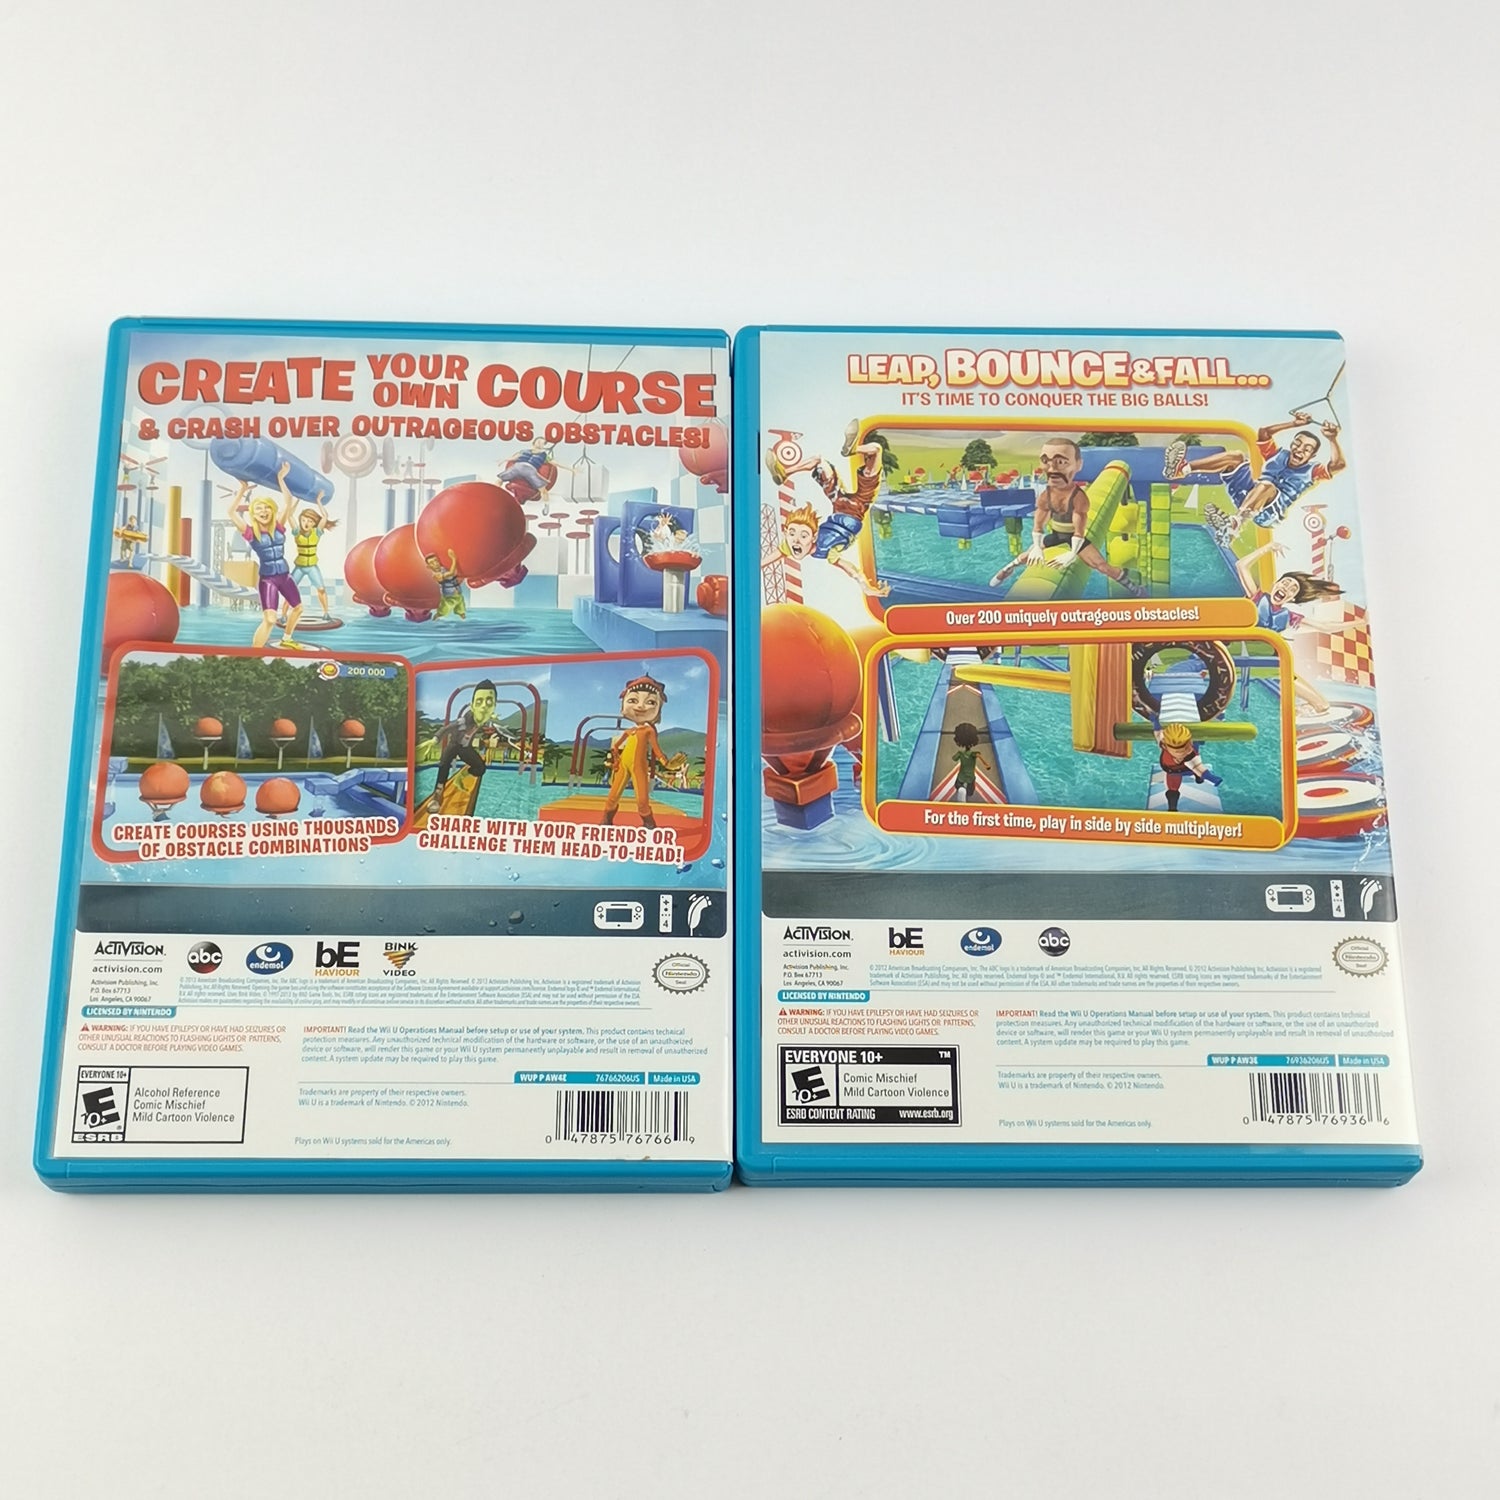 Nintendo Wii U Games: Wipeout 3 & Wipe Out Create & Crash - OVP NTSC USA